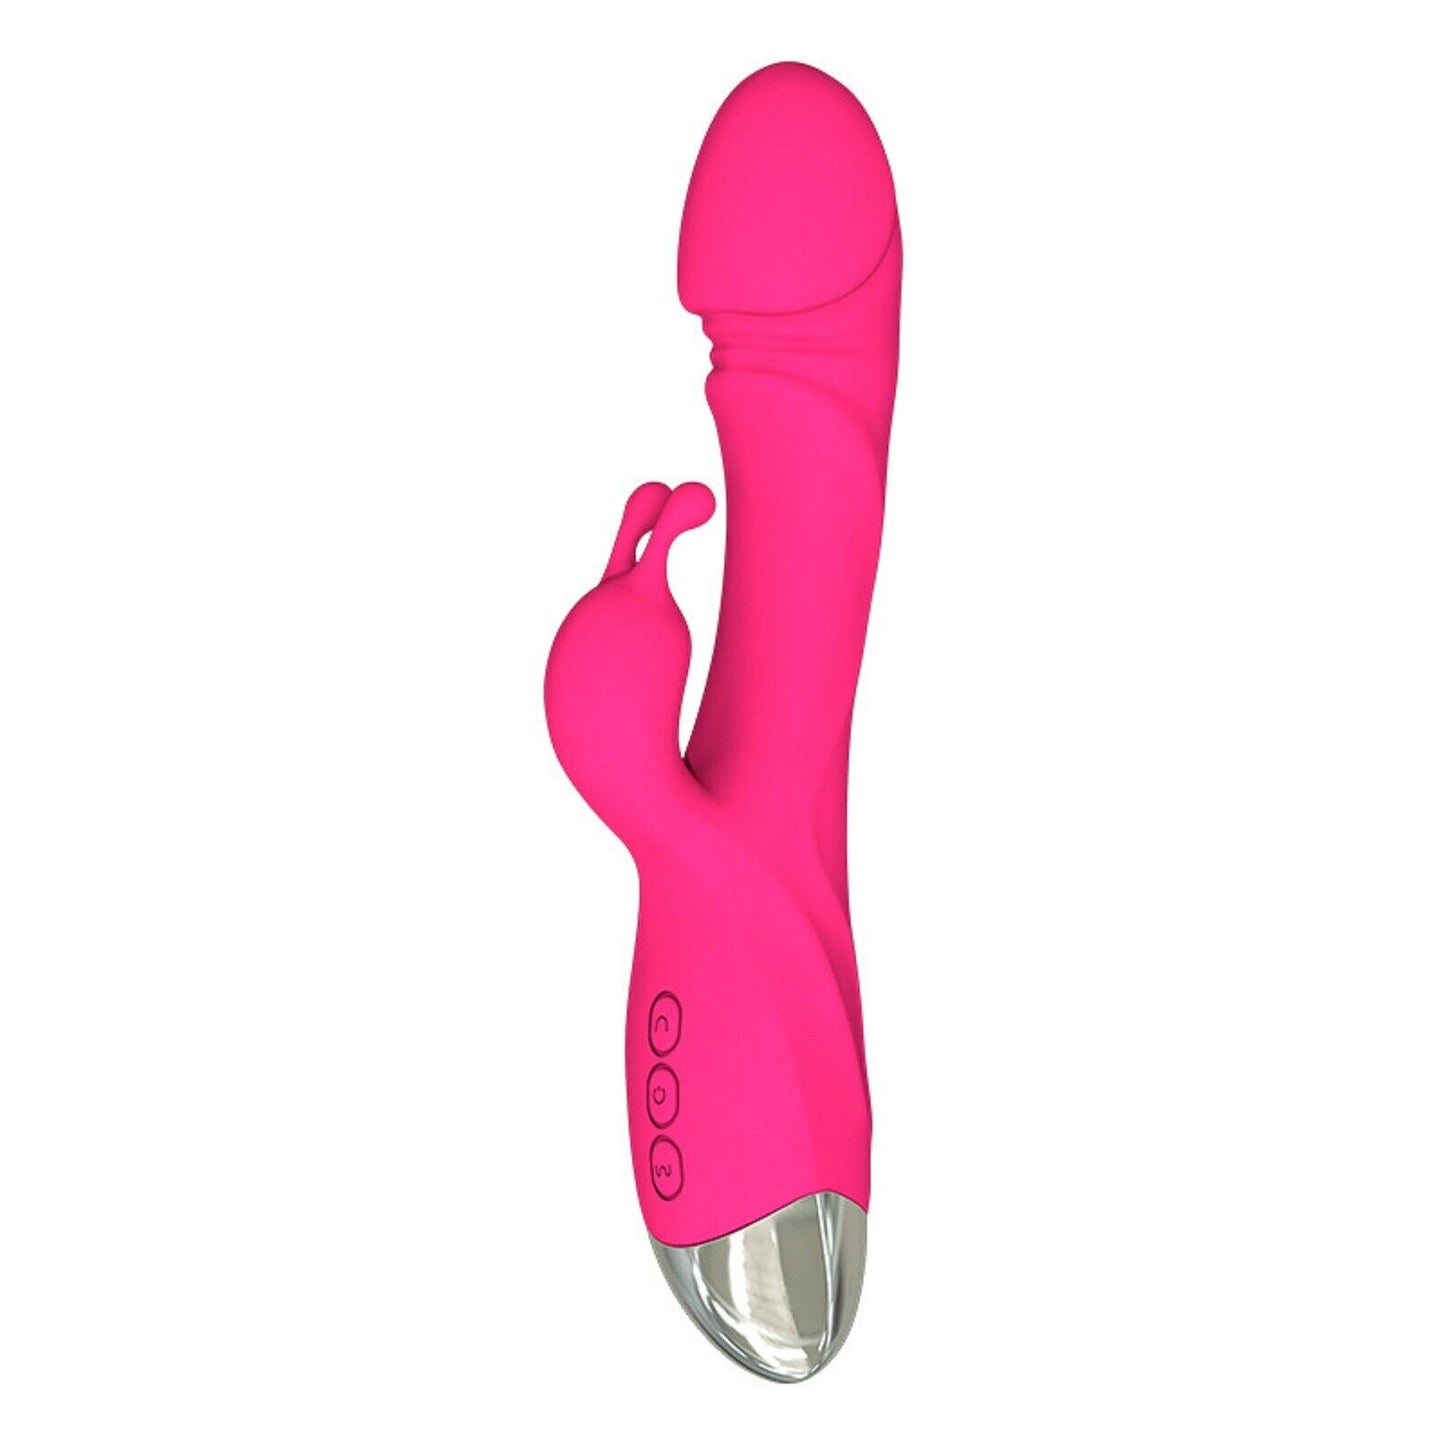 8" Multi Speed G Spot Dildo Rabbit Vibrator Vaginal Clit Female Wand Sex Toy